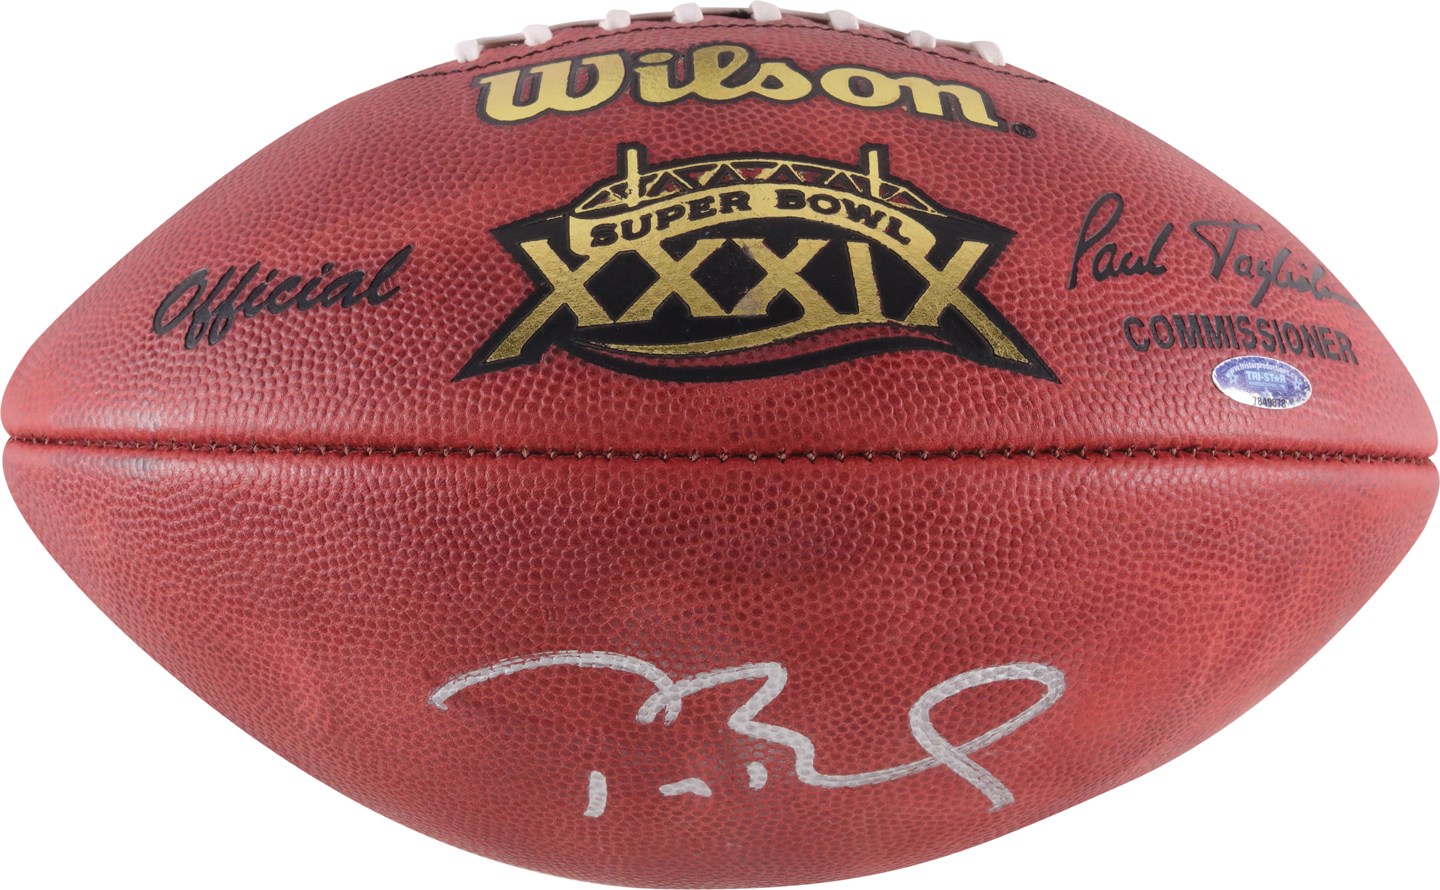 Football - Tom Brady Signed Super Bowl XXXIX Football (Fanatics & Tristar)